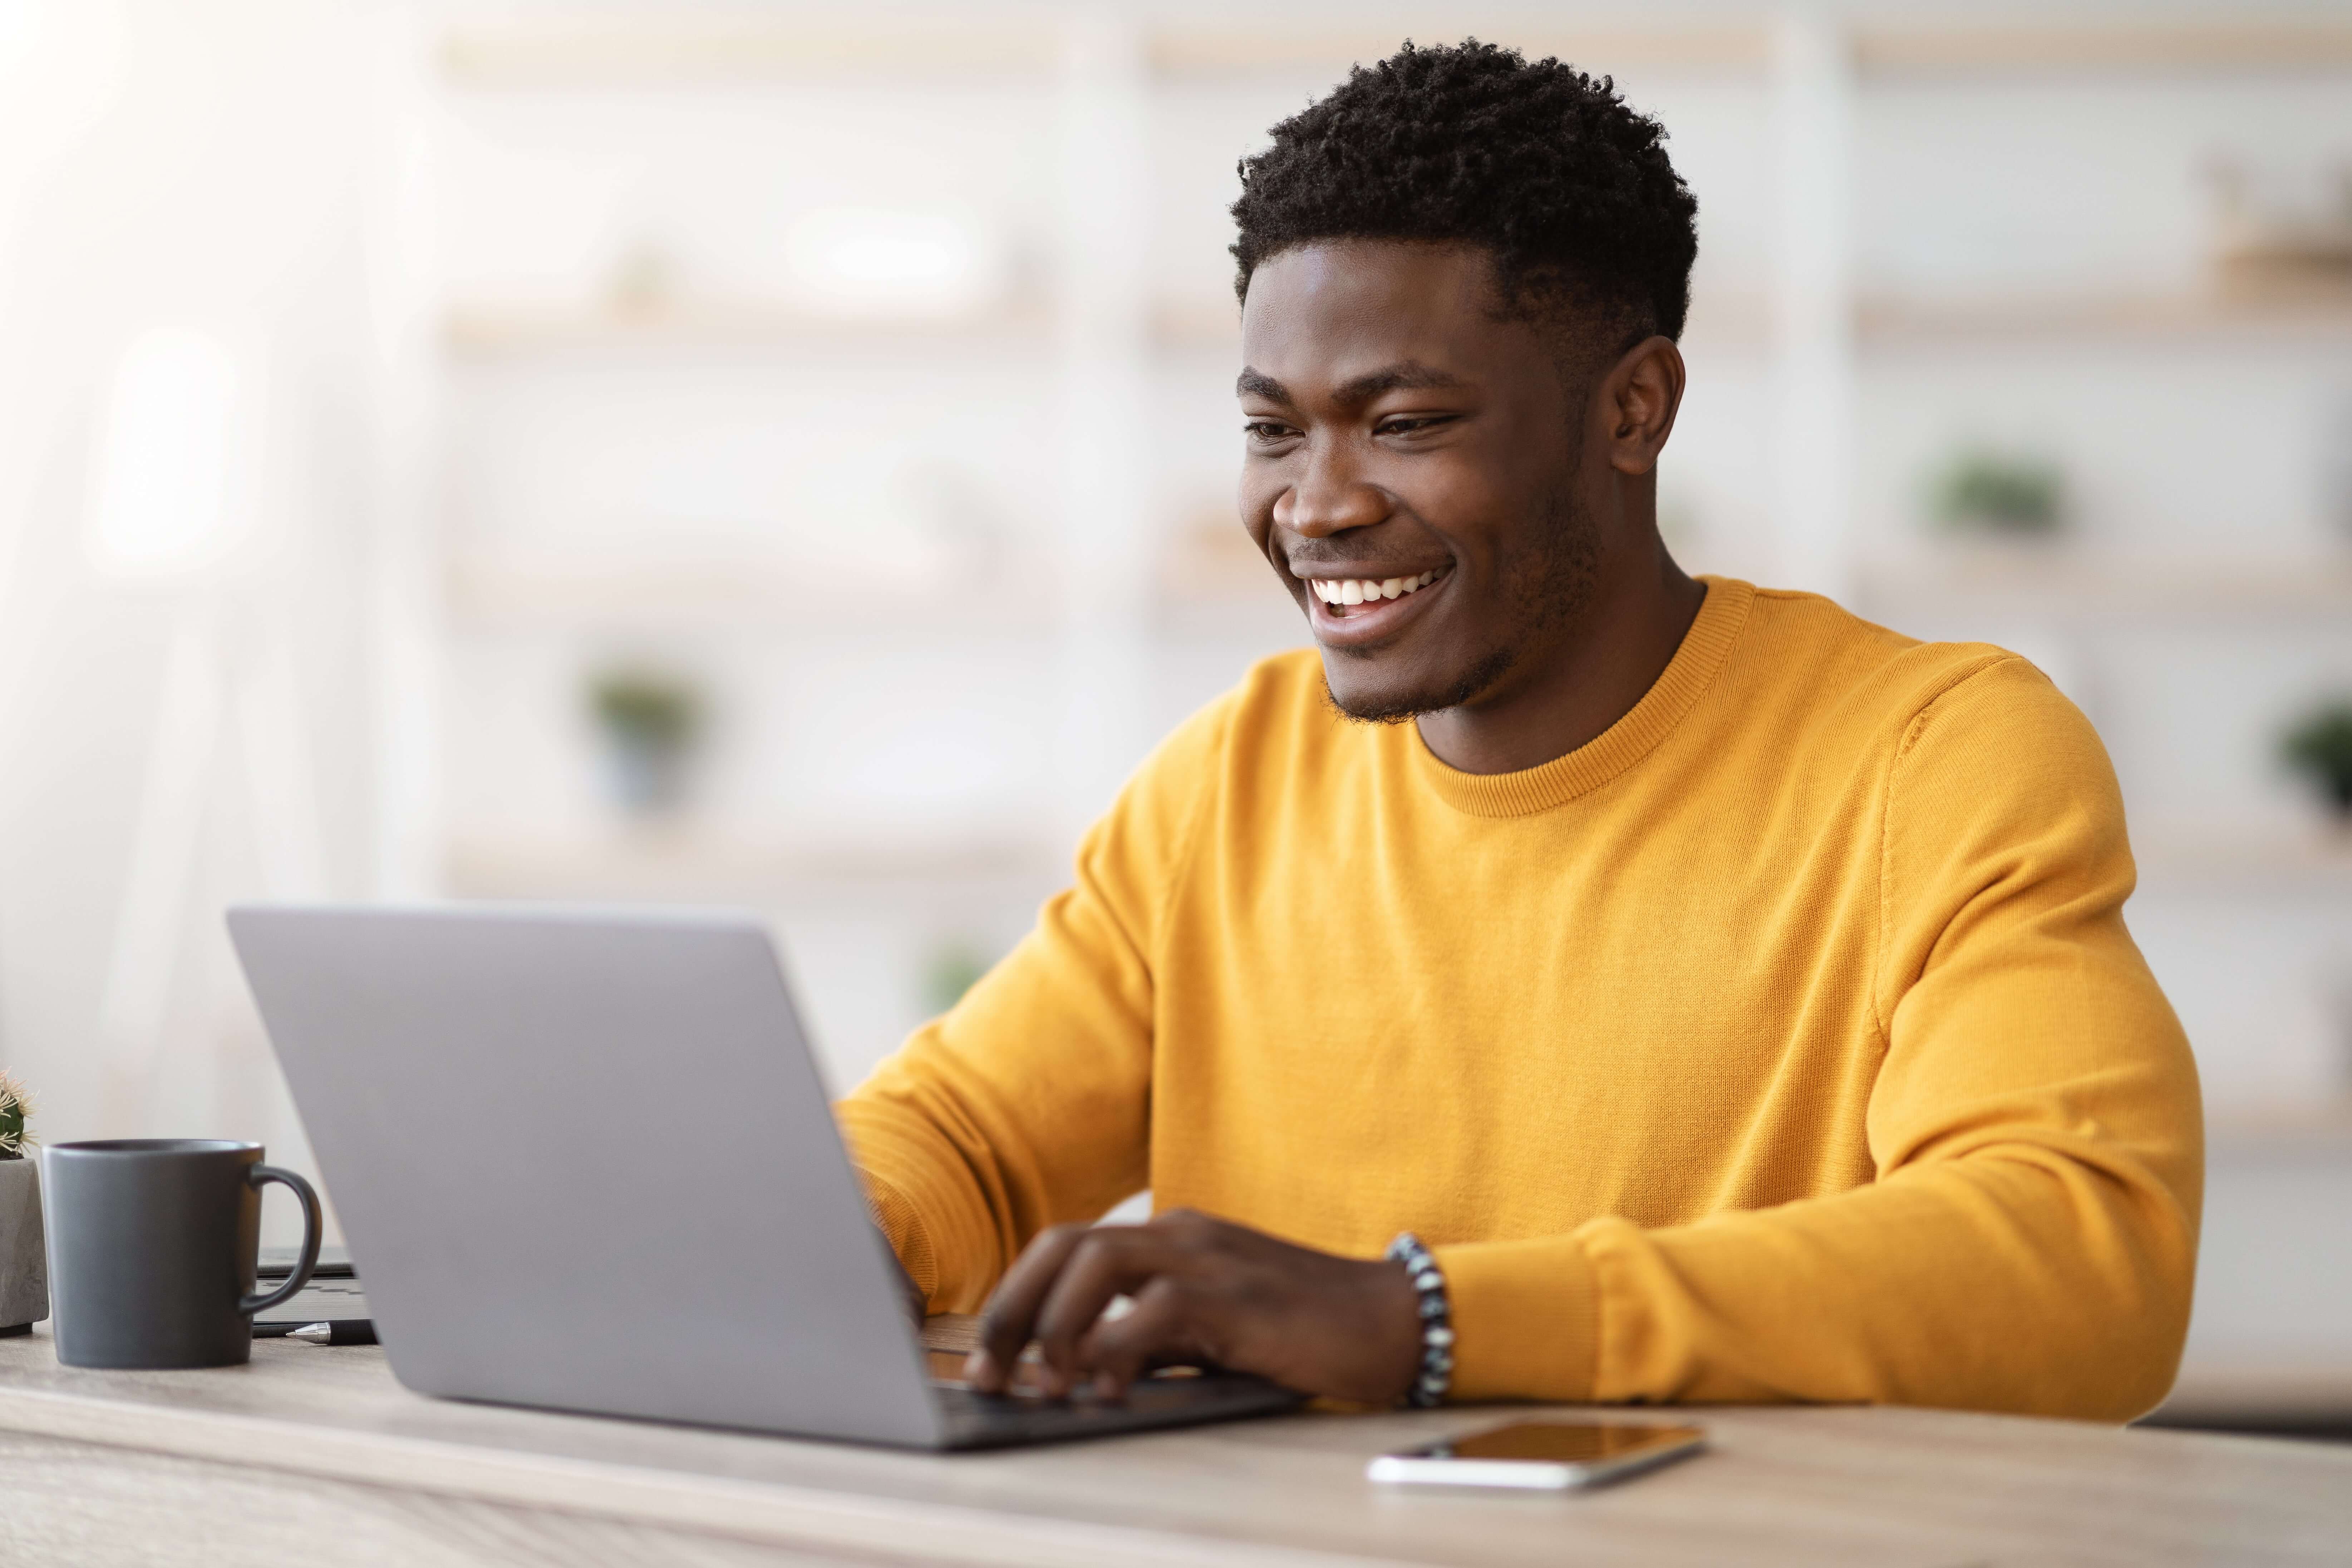 Man in yellow jumper smiling at laptop